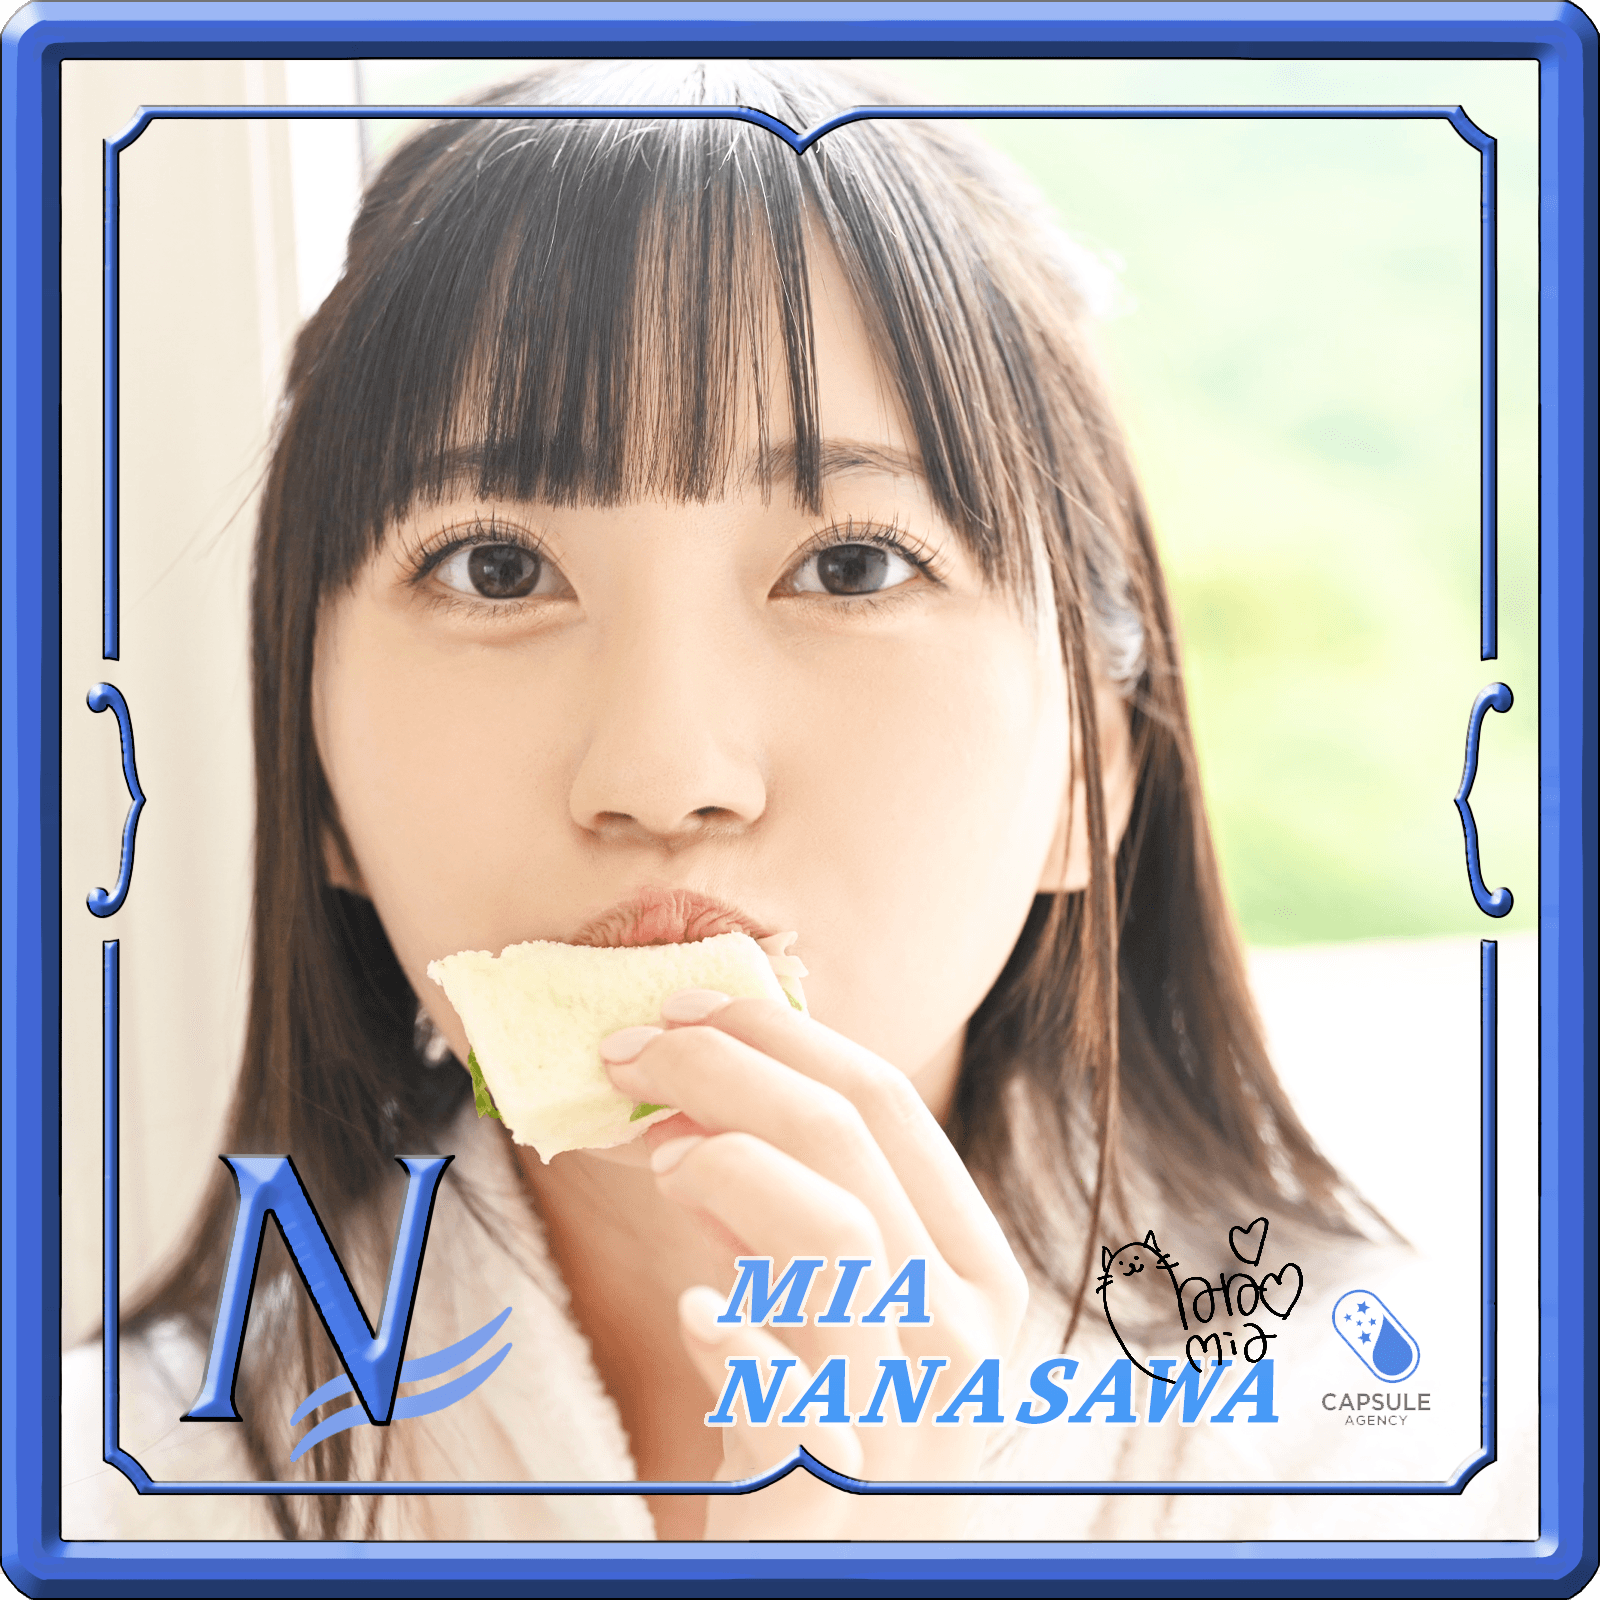 Mia Nanasawa Off-Shot with Sandwiches Ver. [Normal] - CAPSULE